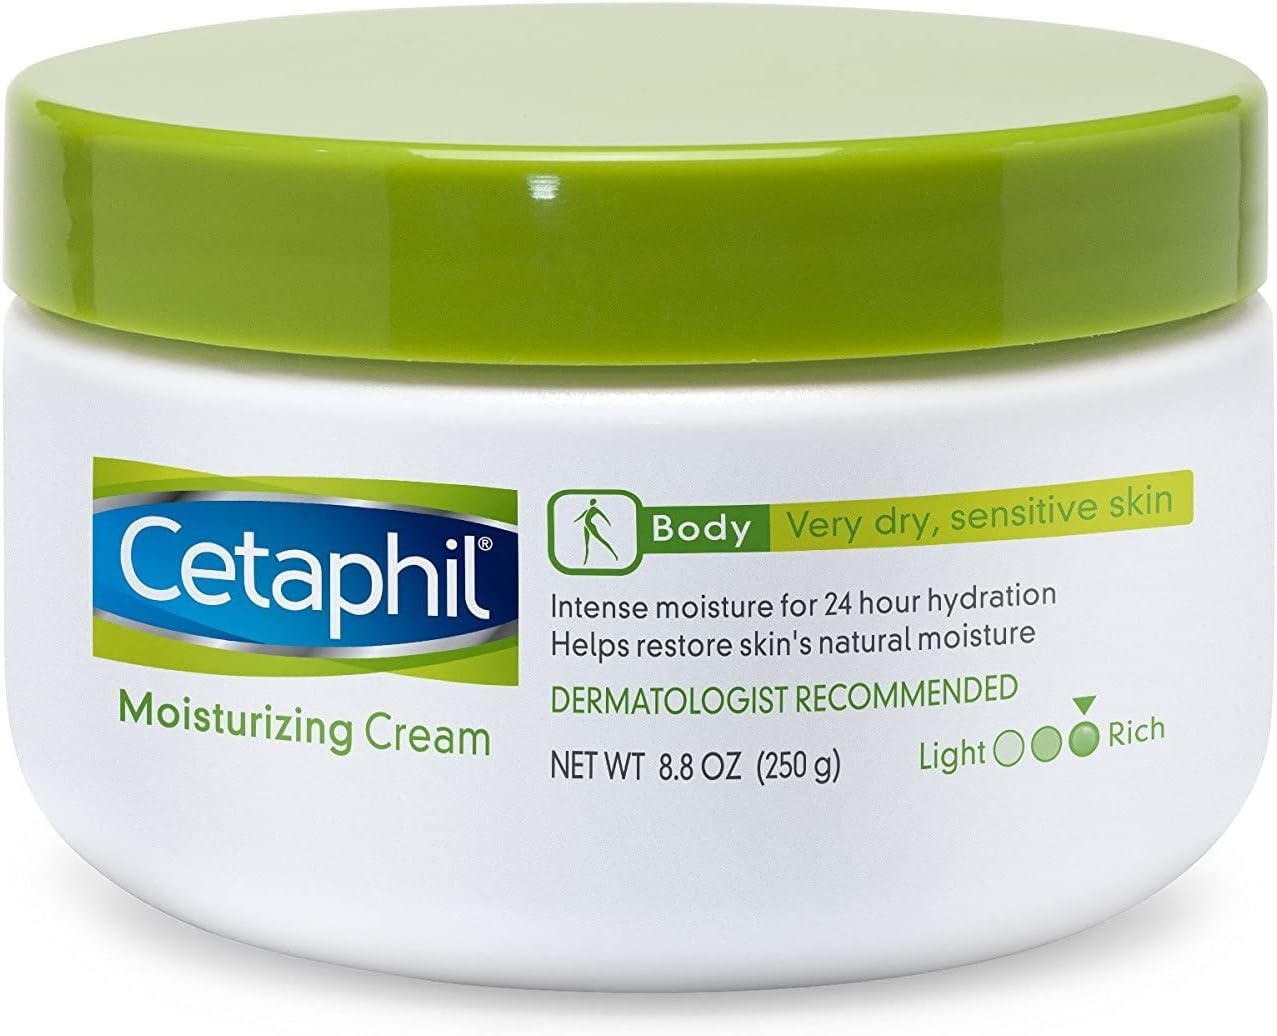 Cetaphil Moisturizing Cream 453g (Pack of 2)